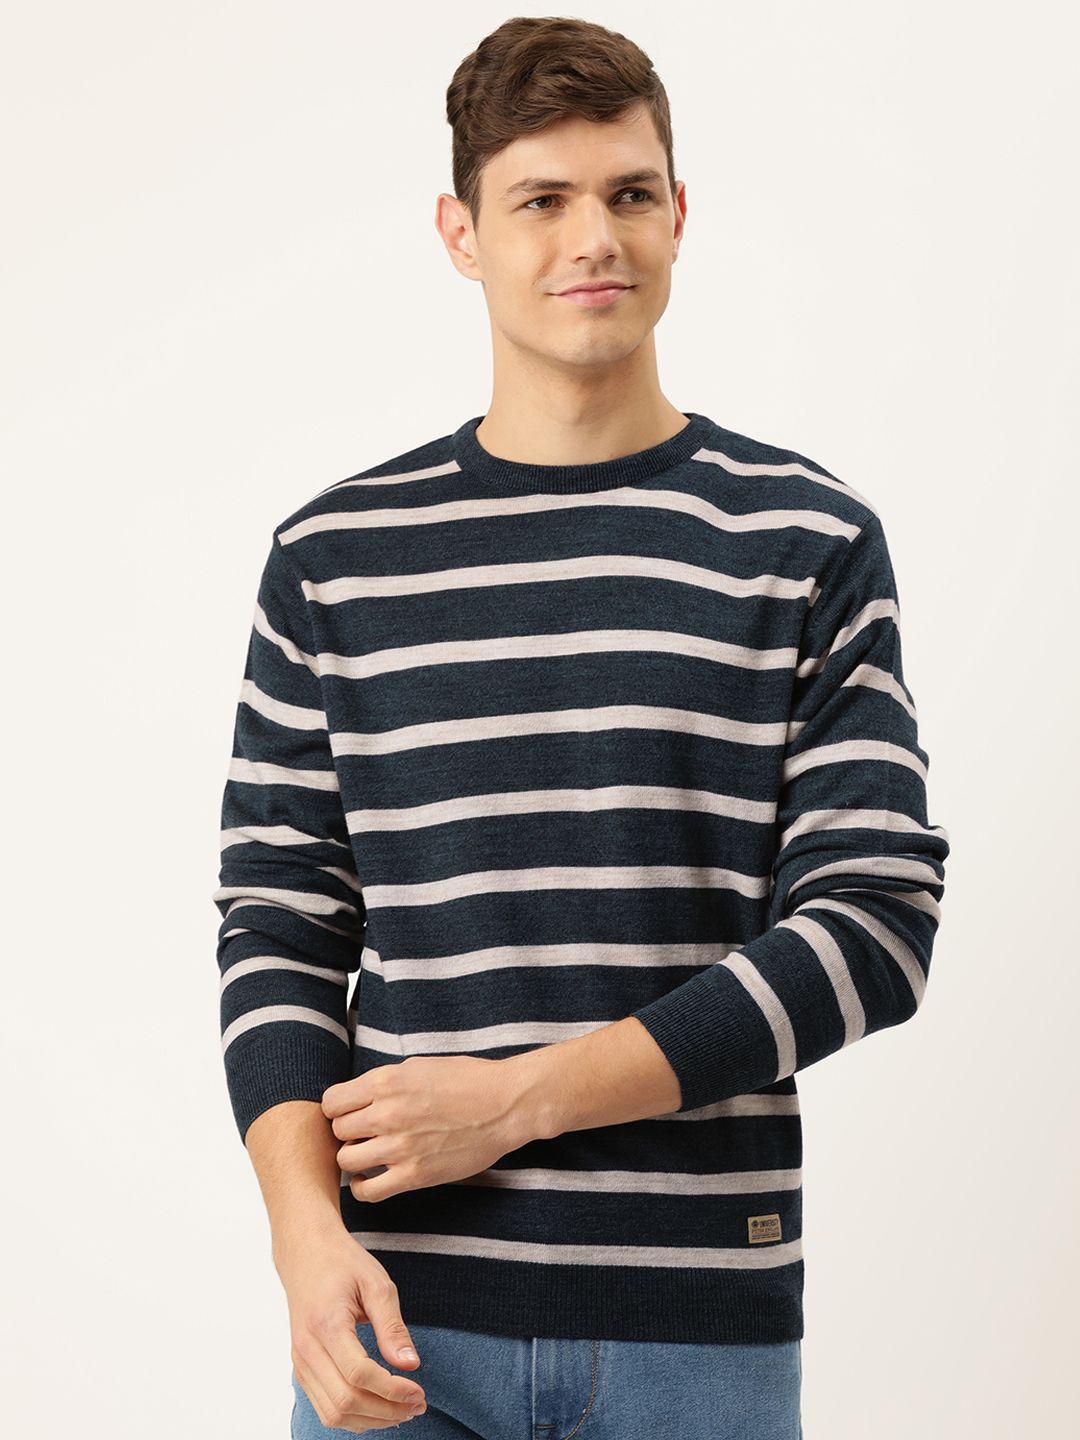 peter england university men navy blue & grey striped pullover sweater